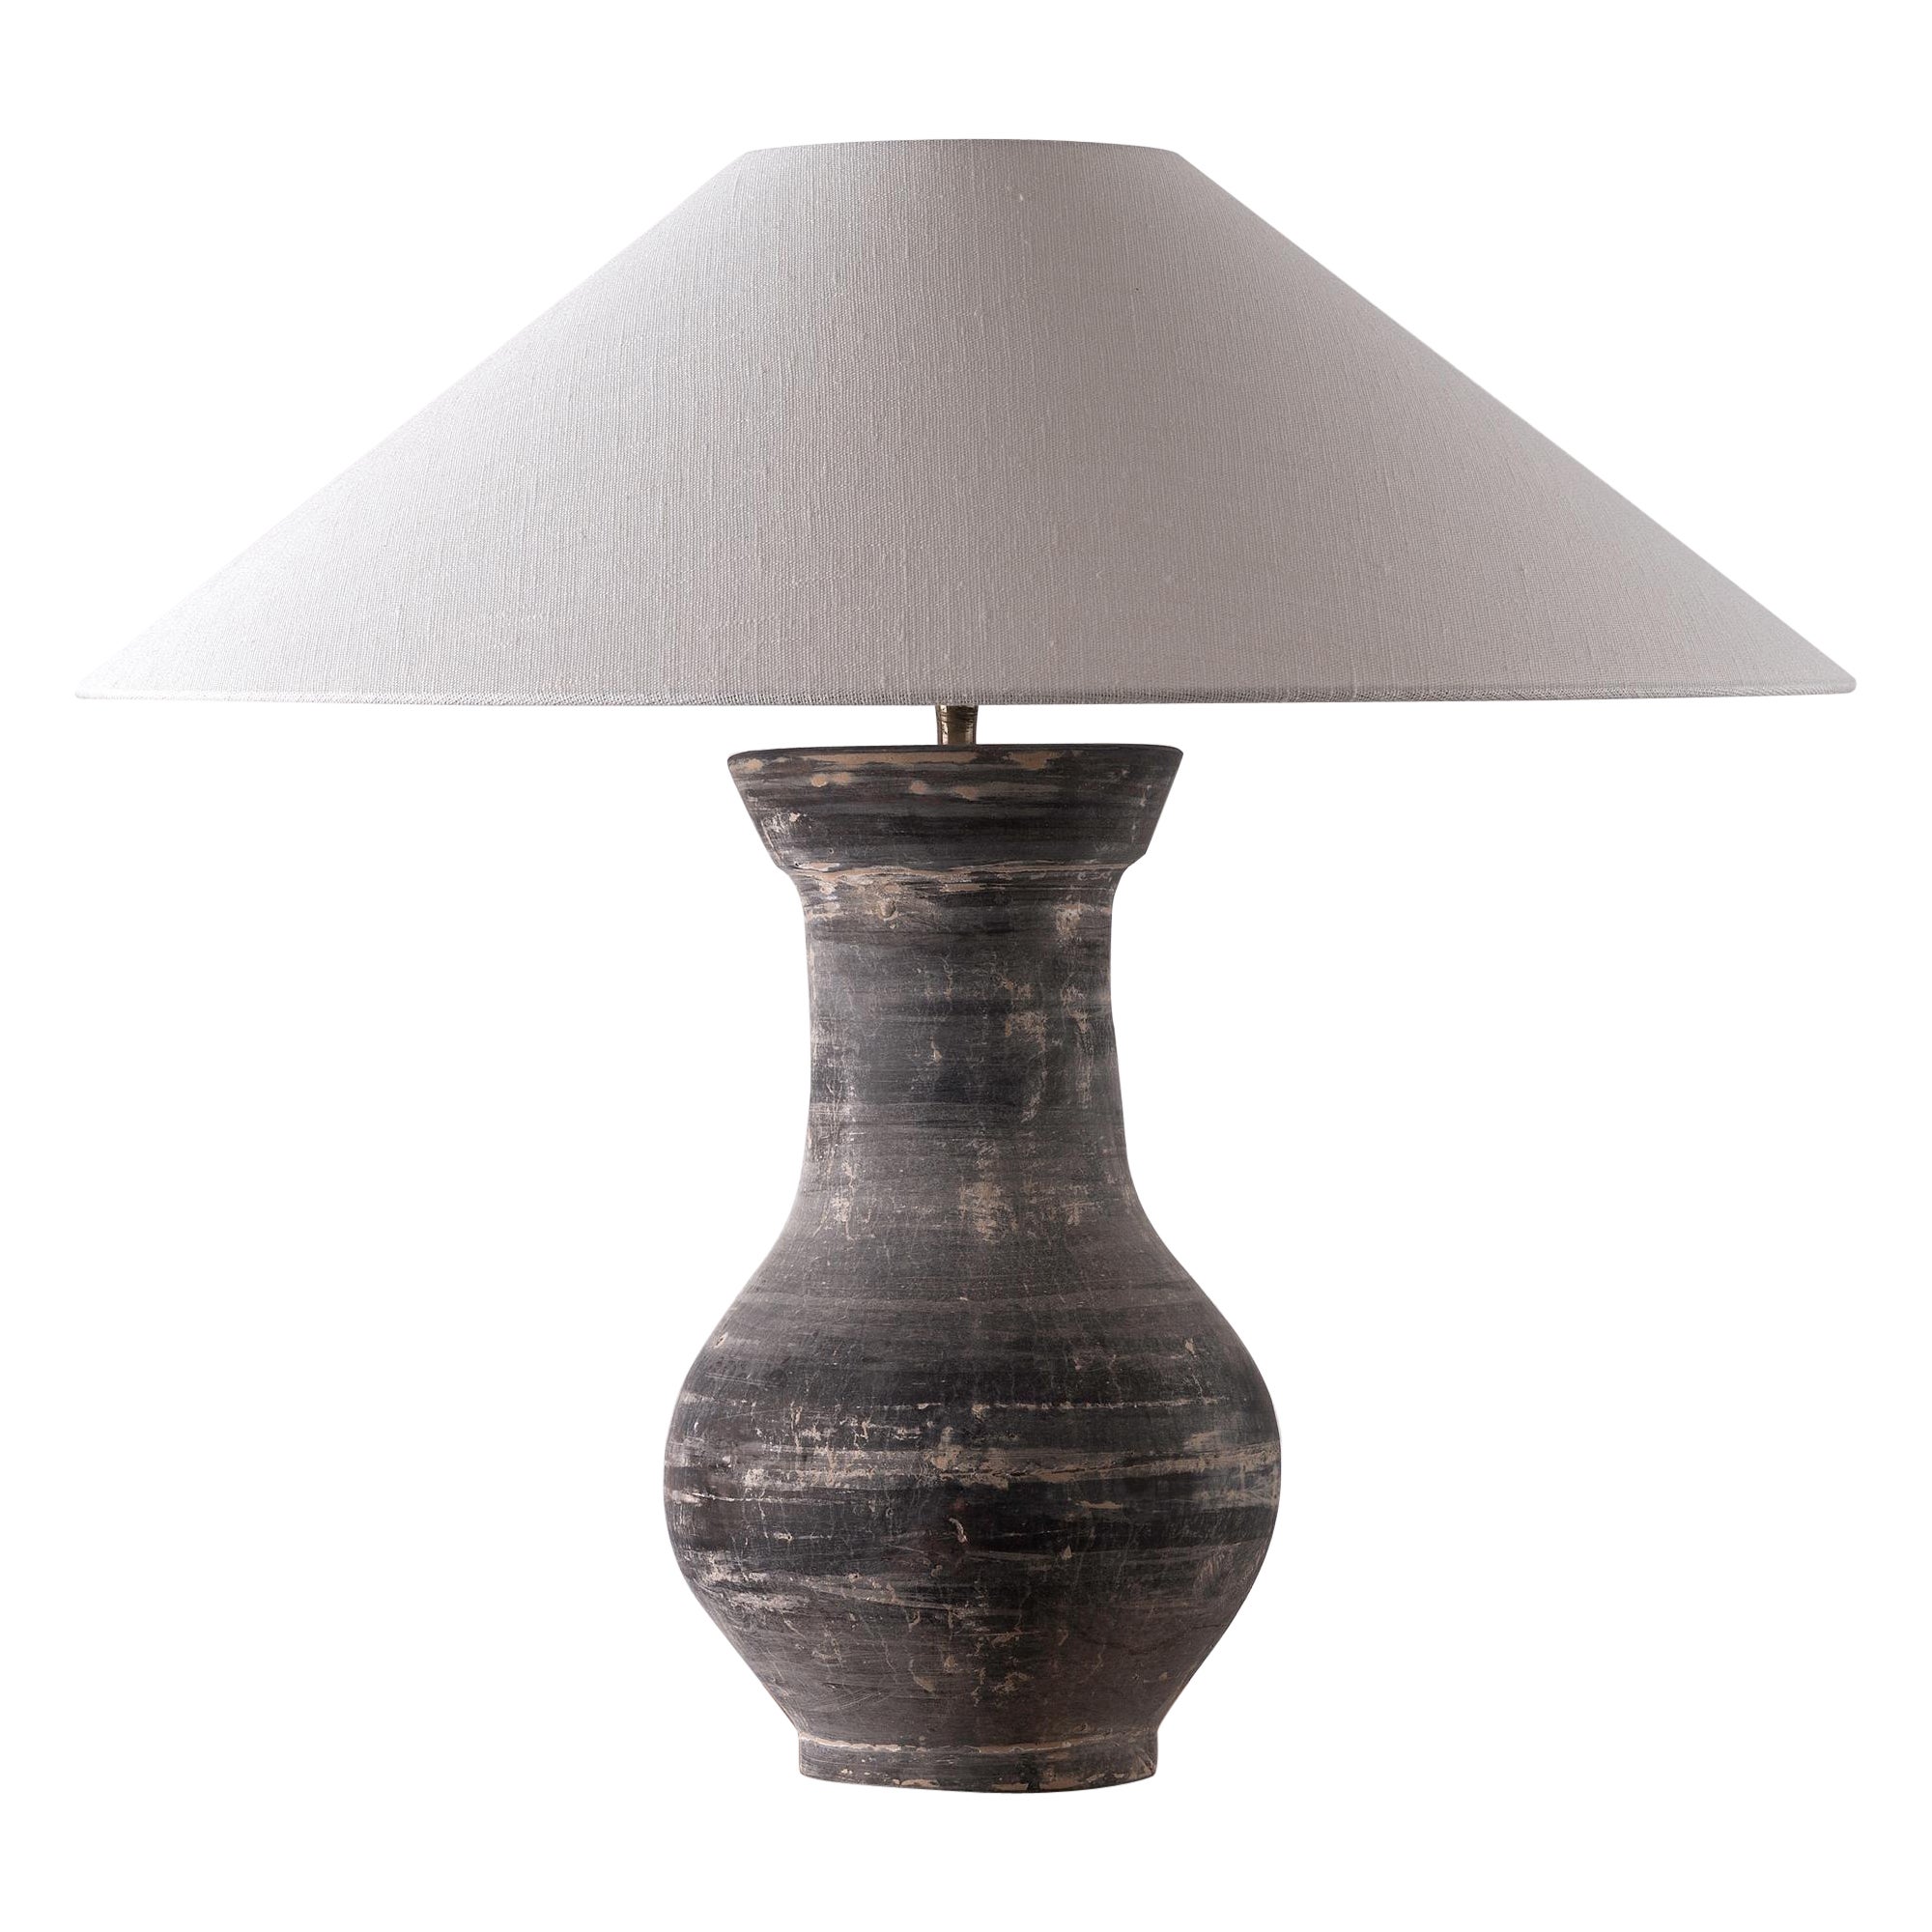 Single Han Style Lamp with Handmade Belgian Linen Shade